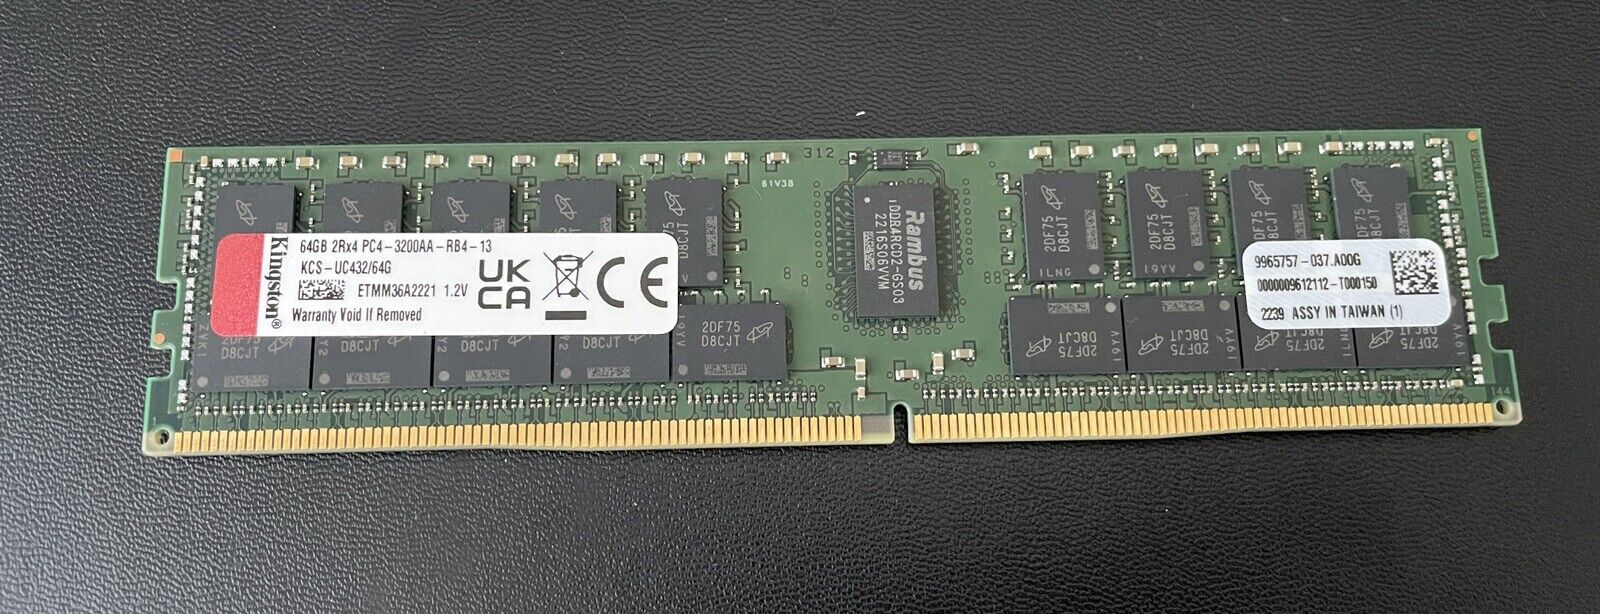 Kingston RAM 64GB 2Rx4 3200mhz KCS - UC432/64G RDIMM ECC